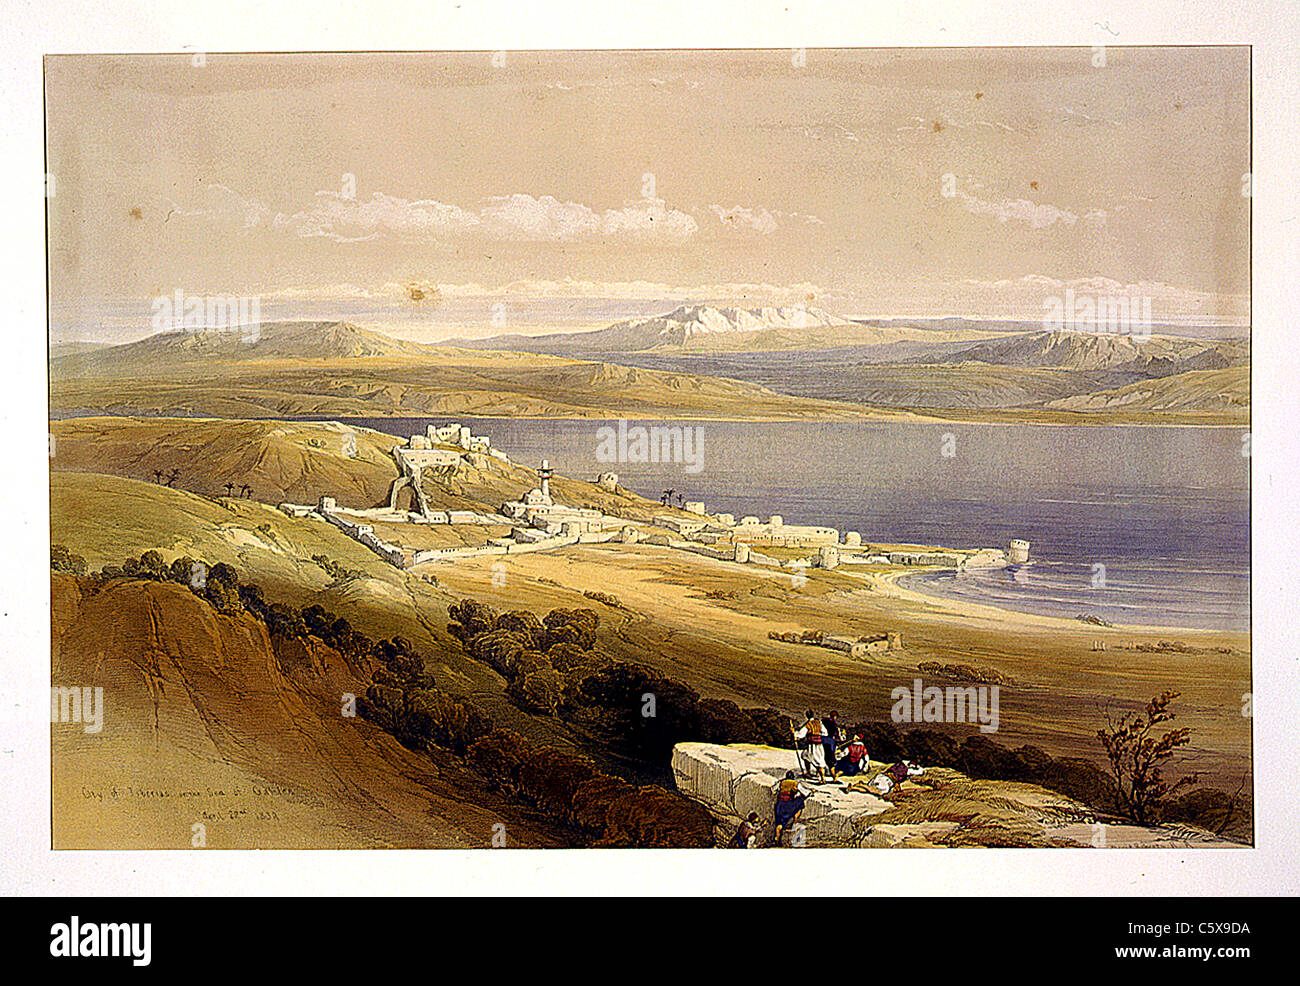 City of Tibarias (i.e., Tiberias) on the Sea of Galilee April 22nd 1839, Louis Haghe / David Roberts 'The Holy Land, Syria Idumea, Arabia, Egypt Nubia Stock Photo